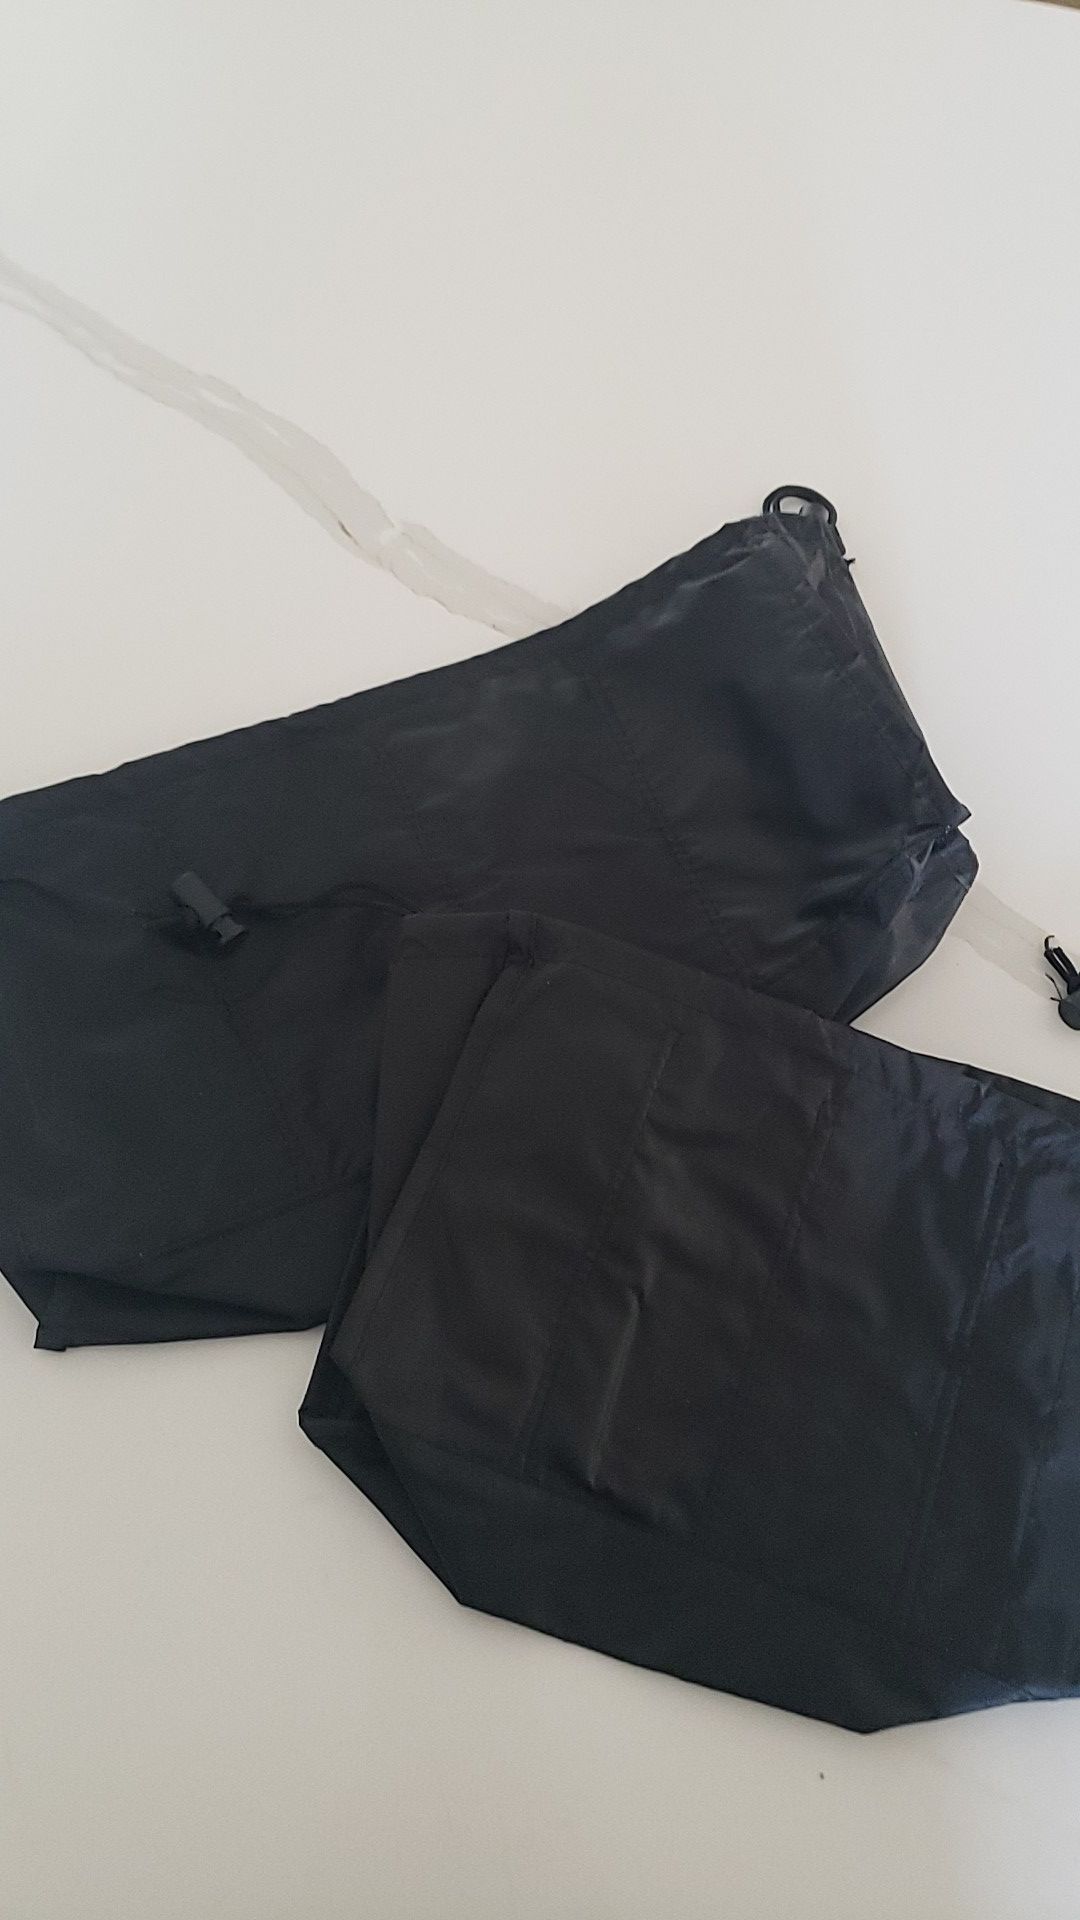 Purse tote handbag diaper bag dividers new